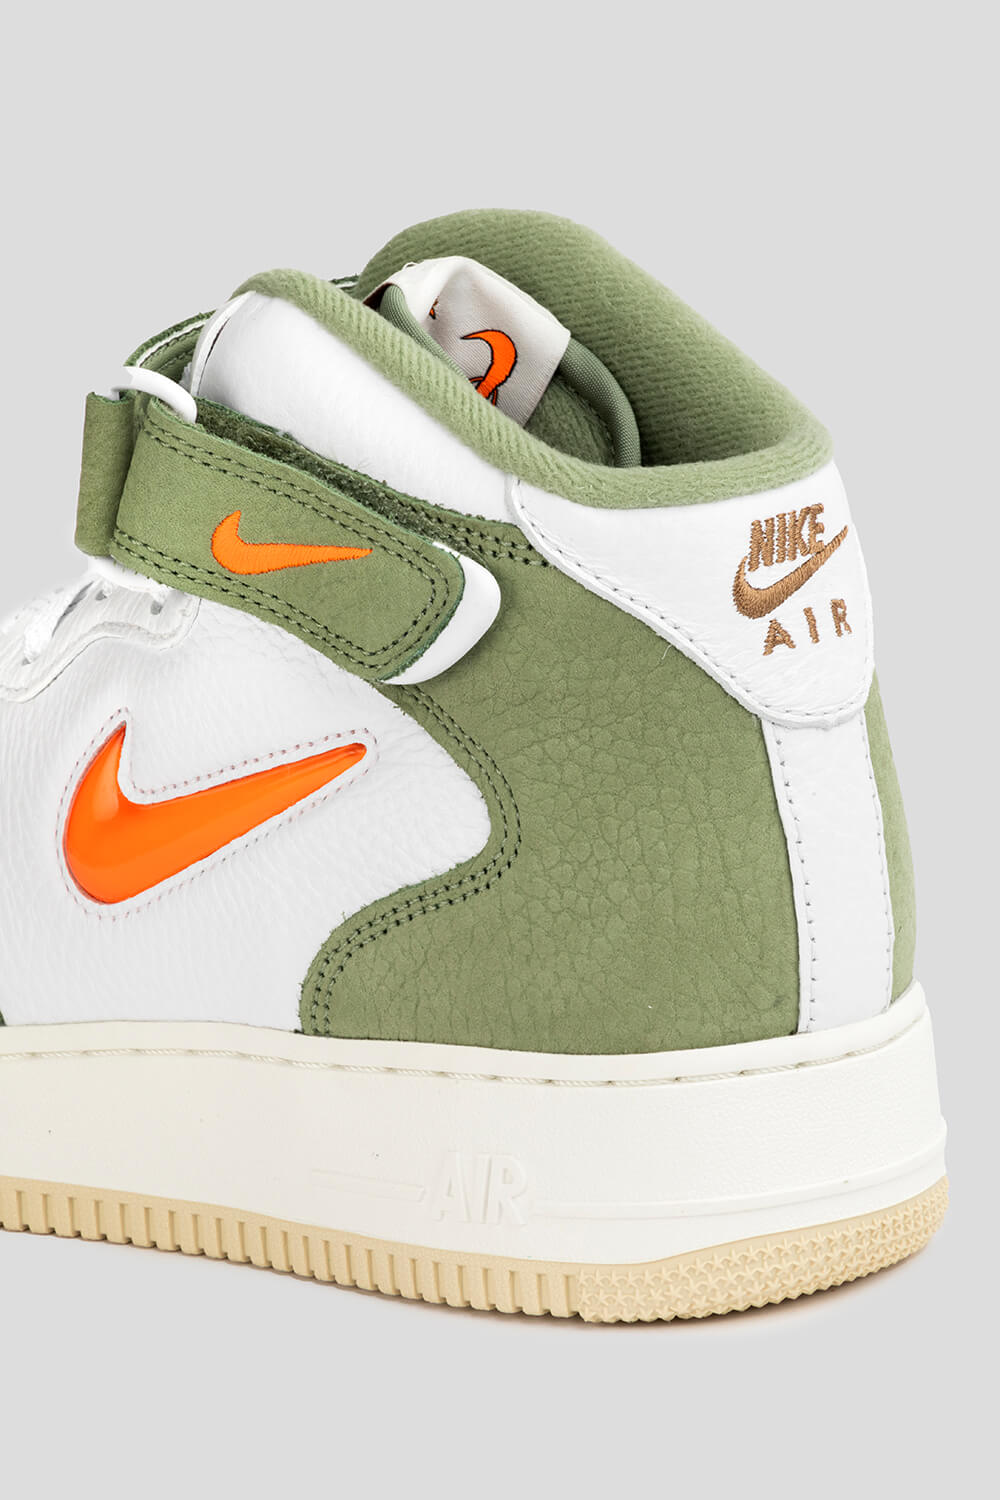 Nike Air Force 1 Mid QS Jewel Oil Green White Orange Mens Size 13 DQ3505 100